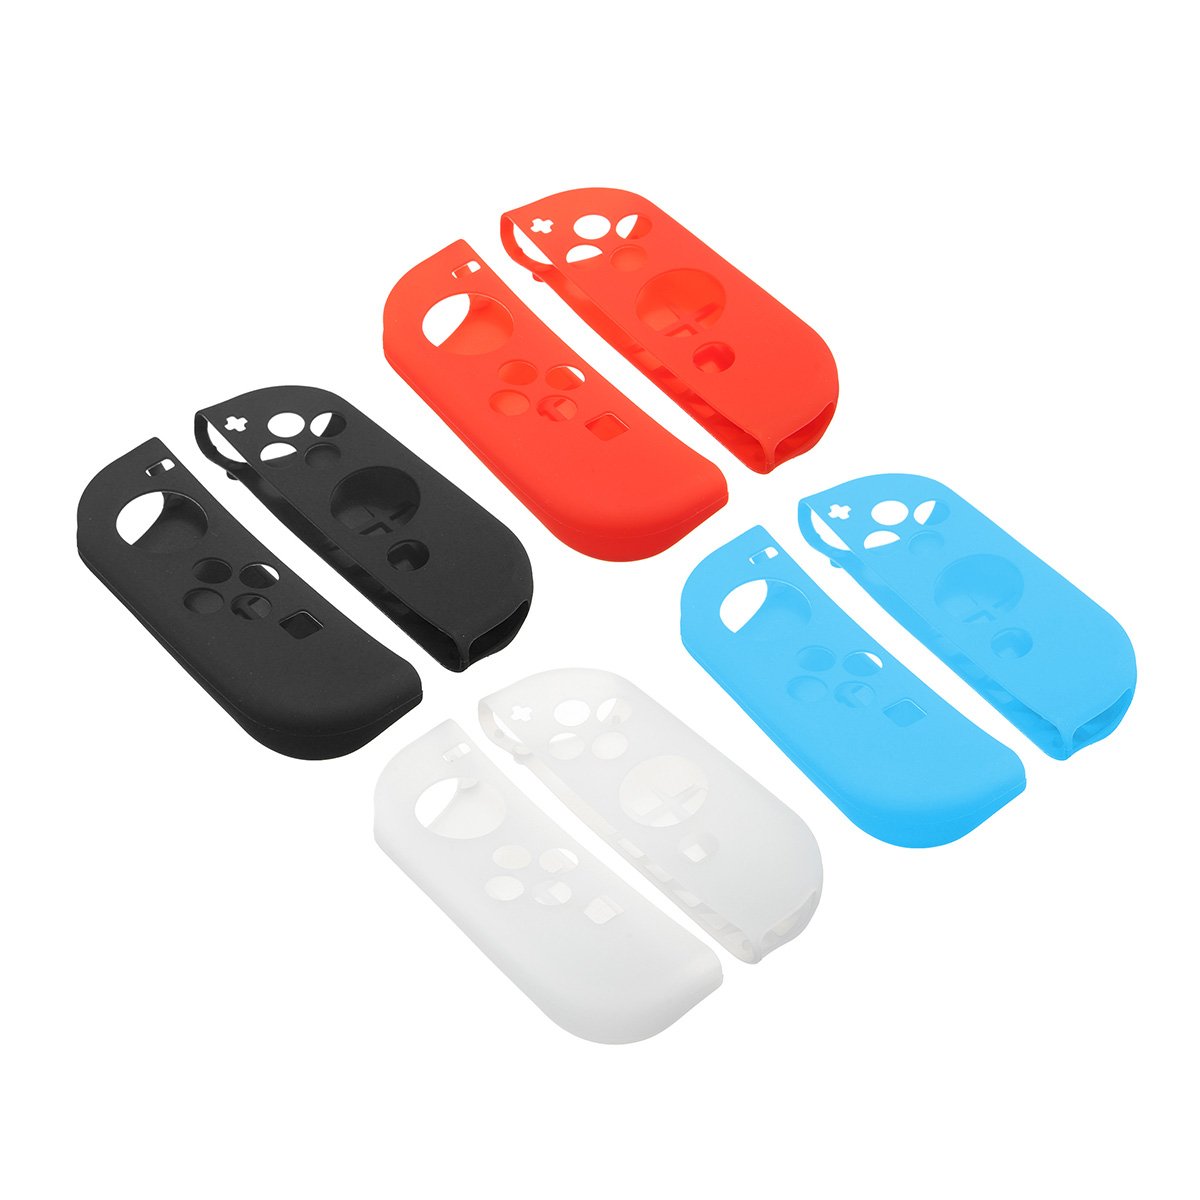 Silicon Case Protective Impact Resistant Rubber Skin Cover For Nintendo Switch Joy-Con Controller 1